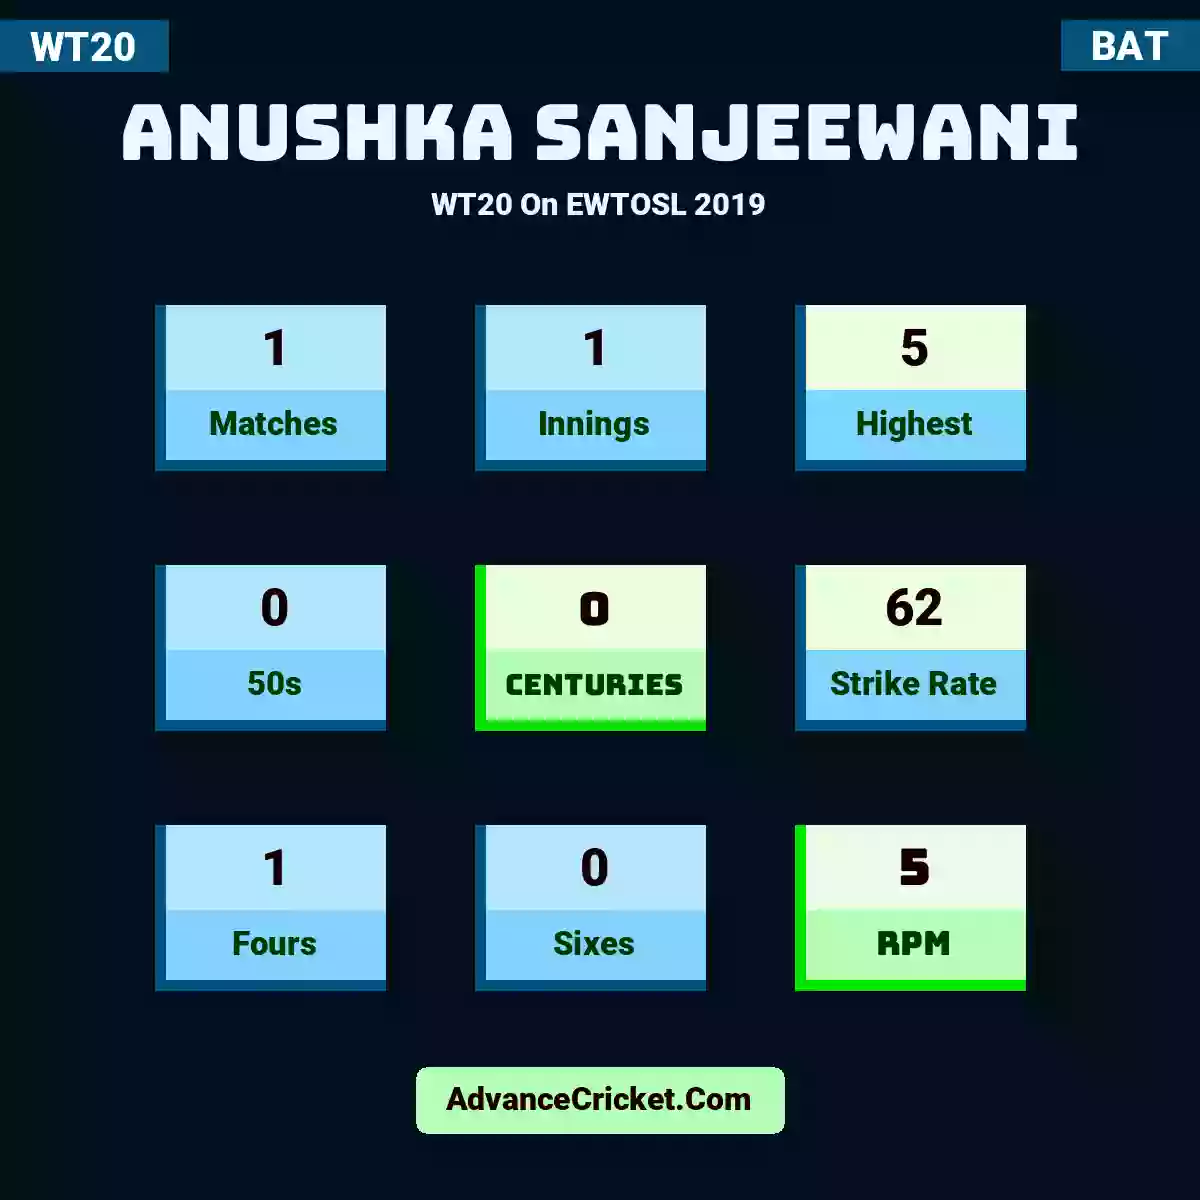 Anushka Sanjeewani WT20  On EWTOSL 2019, Anushka Sanjeewani played 1 matches, scored 5 runs as highest, 0 half-centuries, and 0 centuries, with a strike rate of 62. A.Sanjeewani hit 1 fours and 0 sixes, with an RPM of 5.